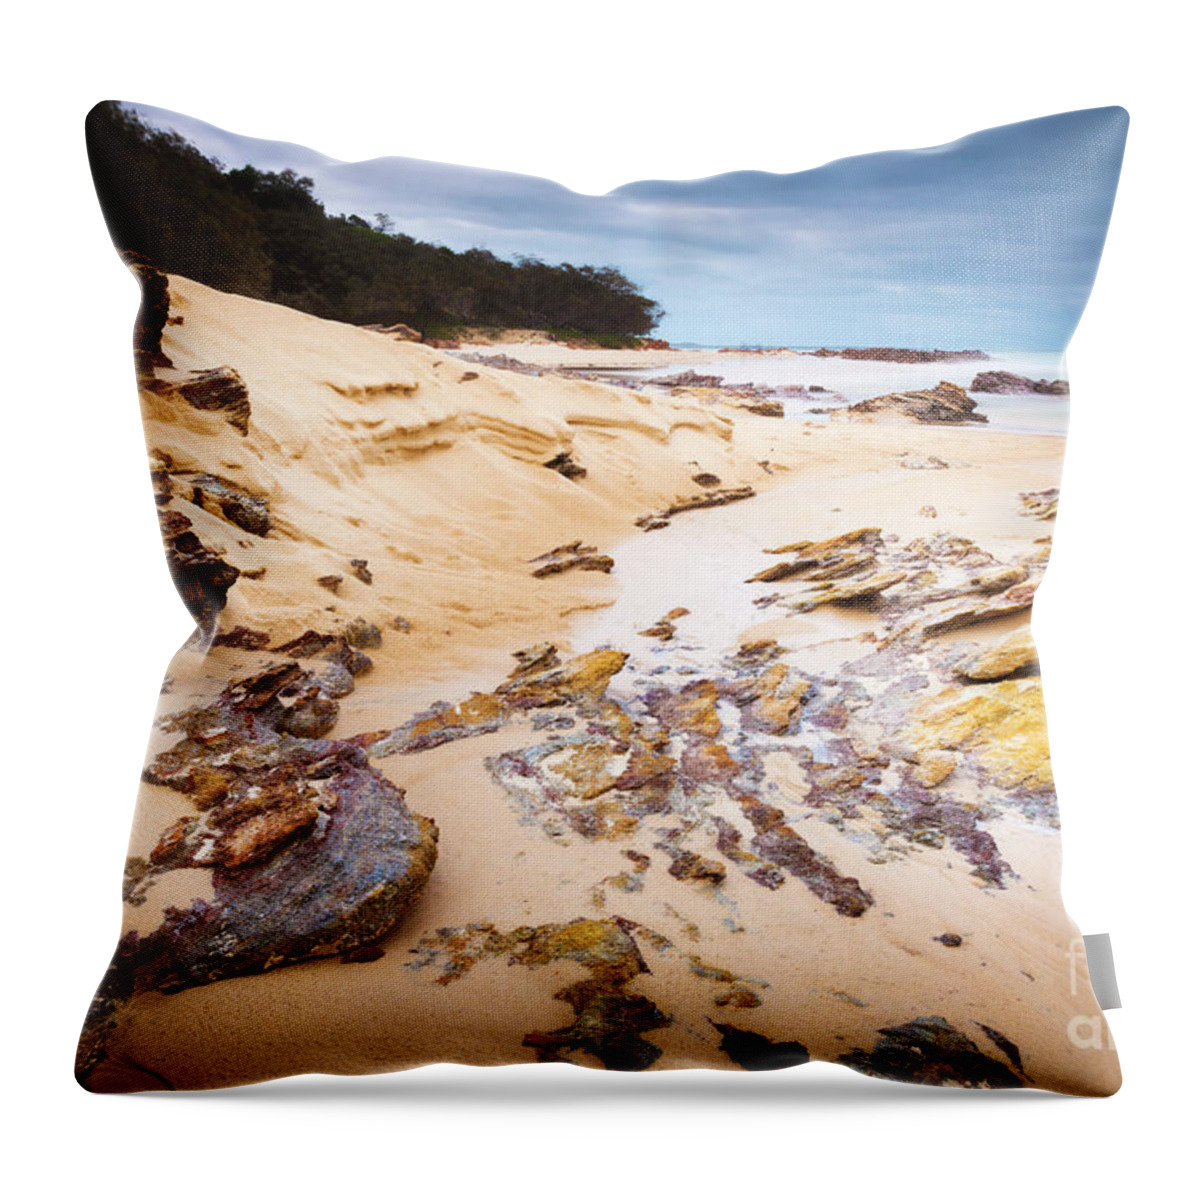 Australia Throw Pillow featuring the photograph Australian Ocean Landscape #1 by THP Creative